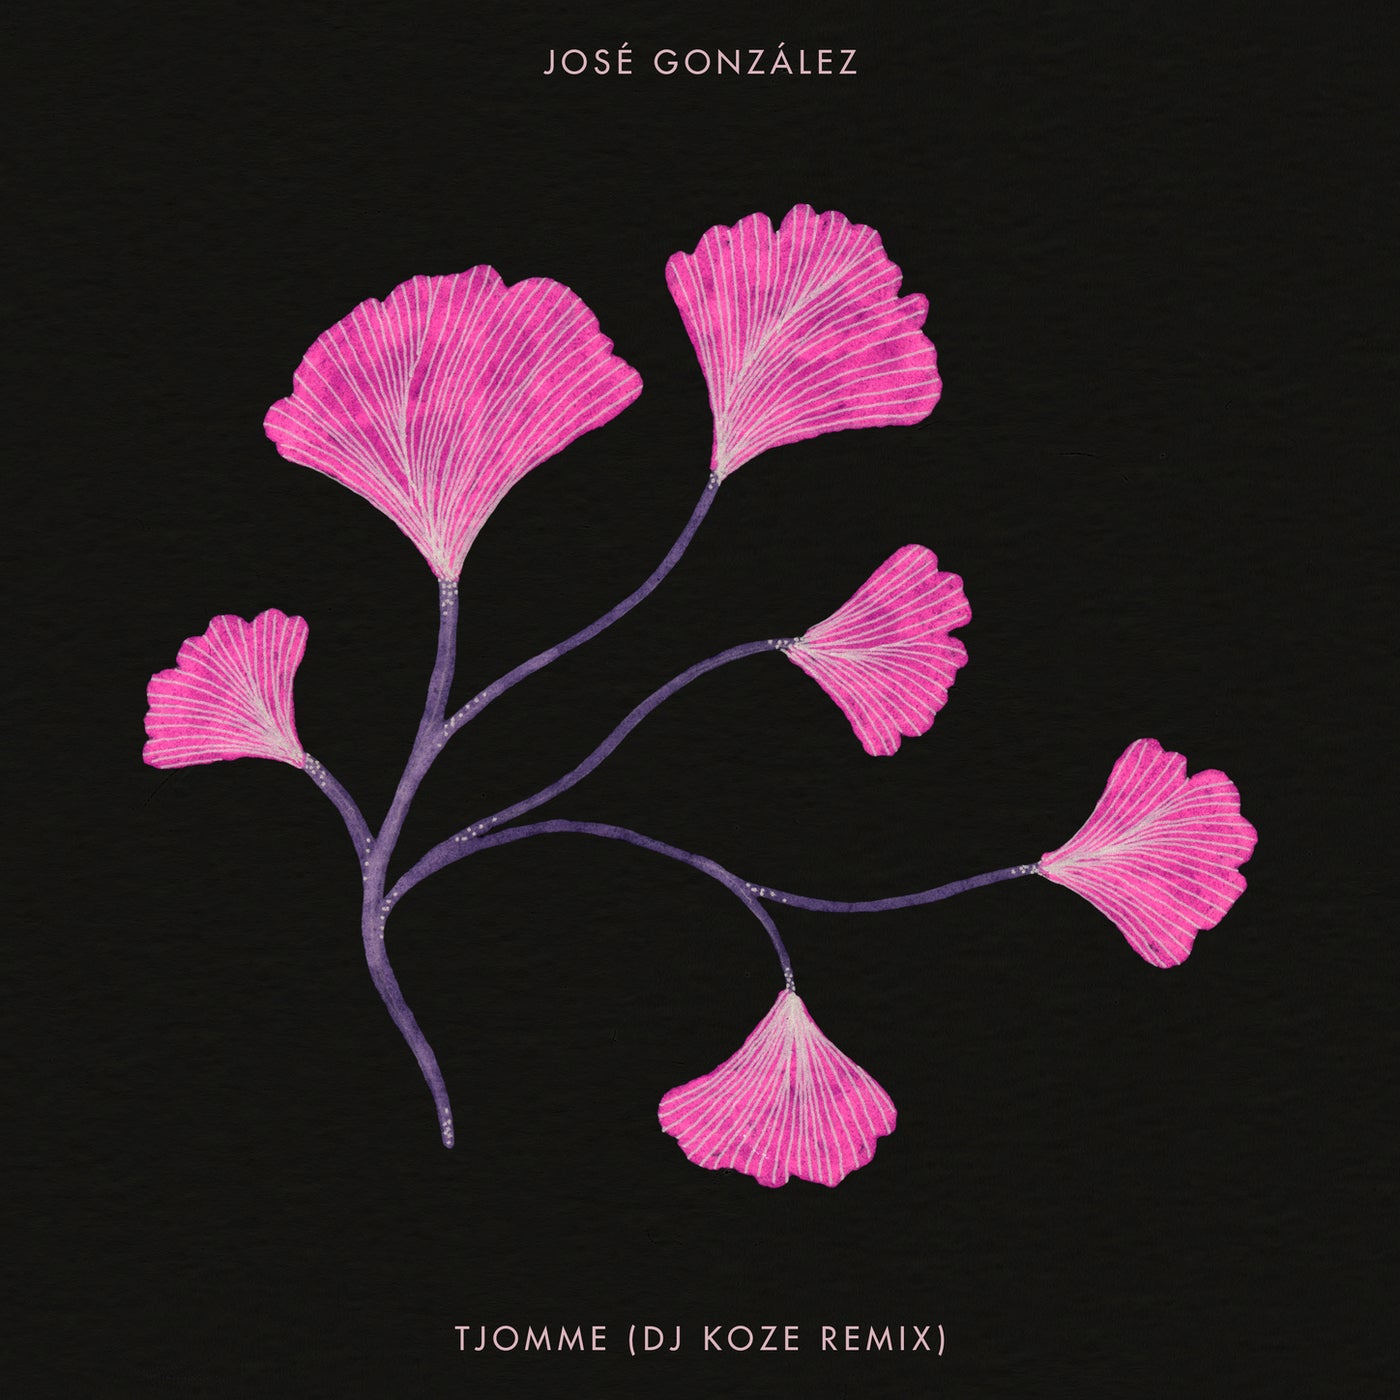 image cover: Jose Gonzalez - Tjomme (DJ Koze Remix) / SLANG50449Z